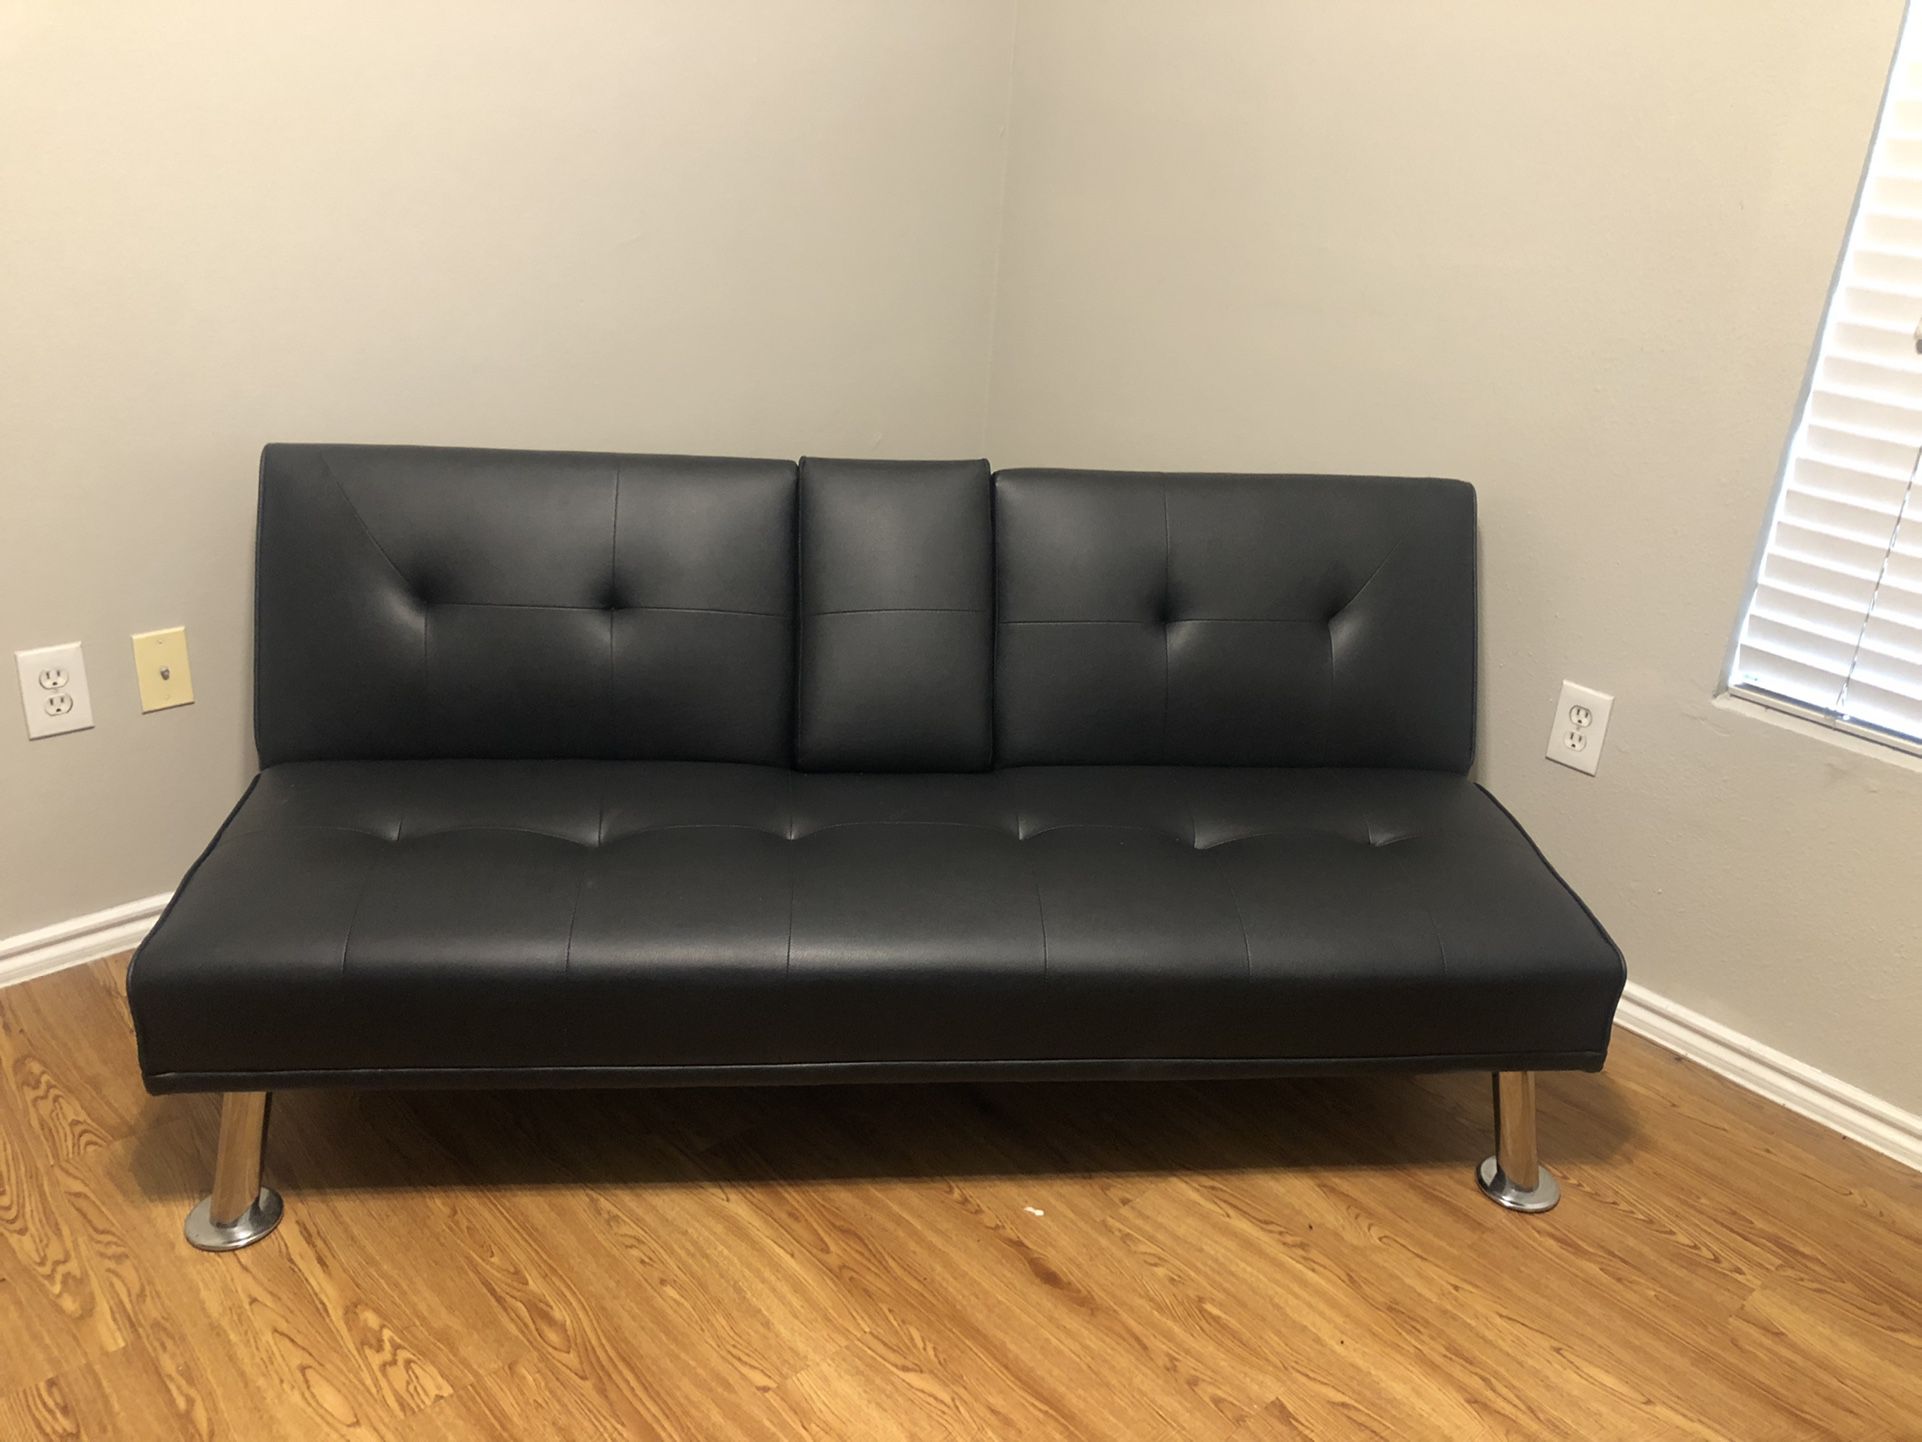 Black Futon/Couch $55 (Almost New)